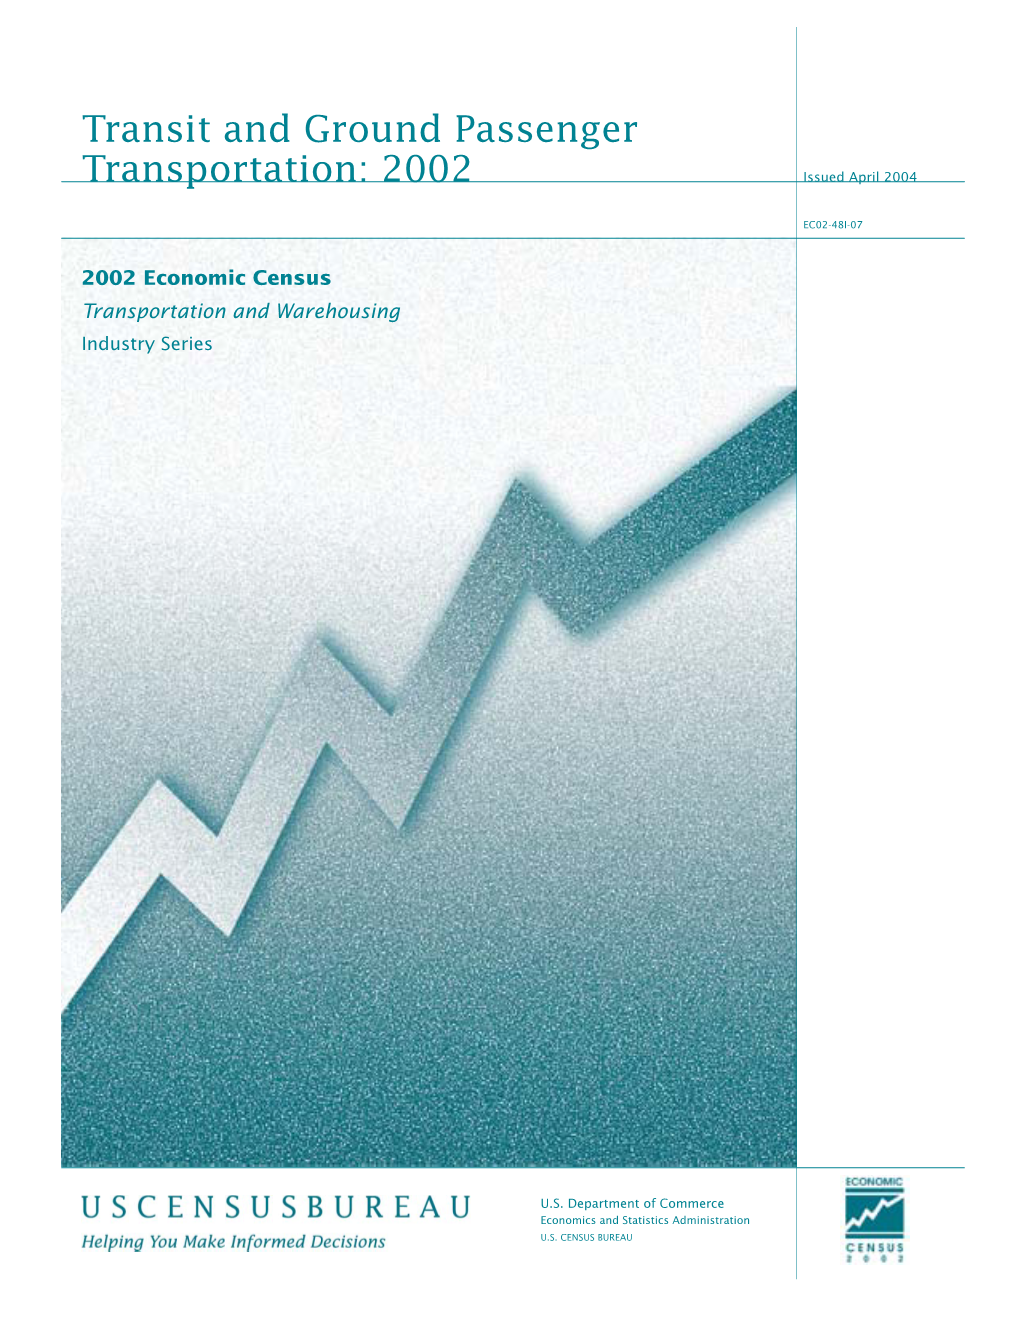 Transit and Ground Passenger Transportation: 2002 2002 Economic Census Transportation and Warehousing Industry Series USCENSUSBUREAU